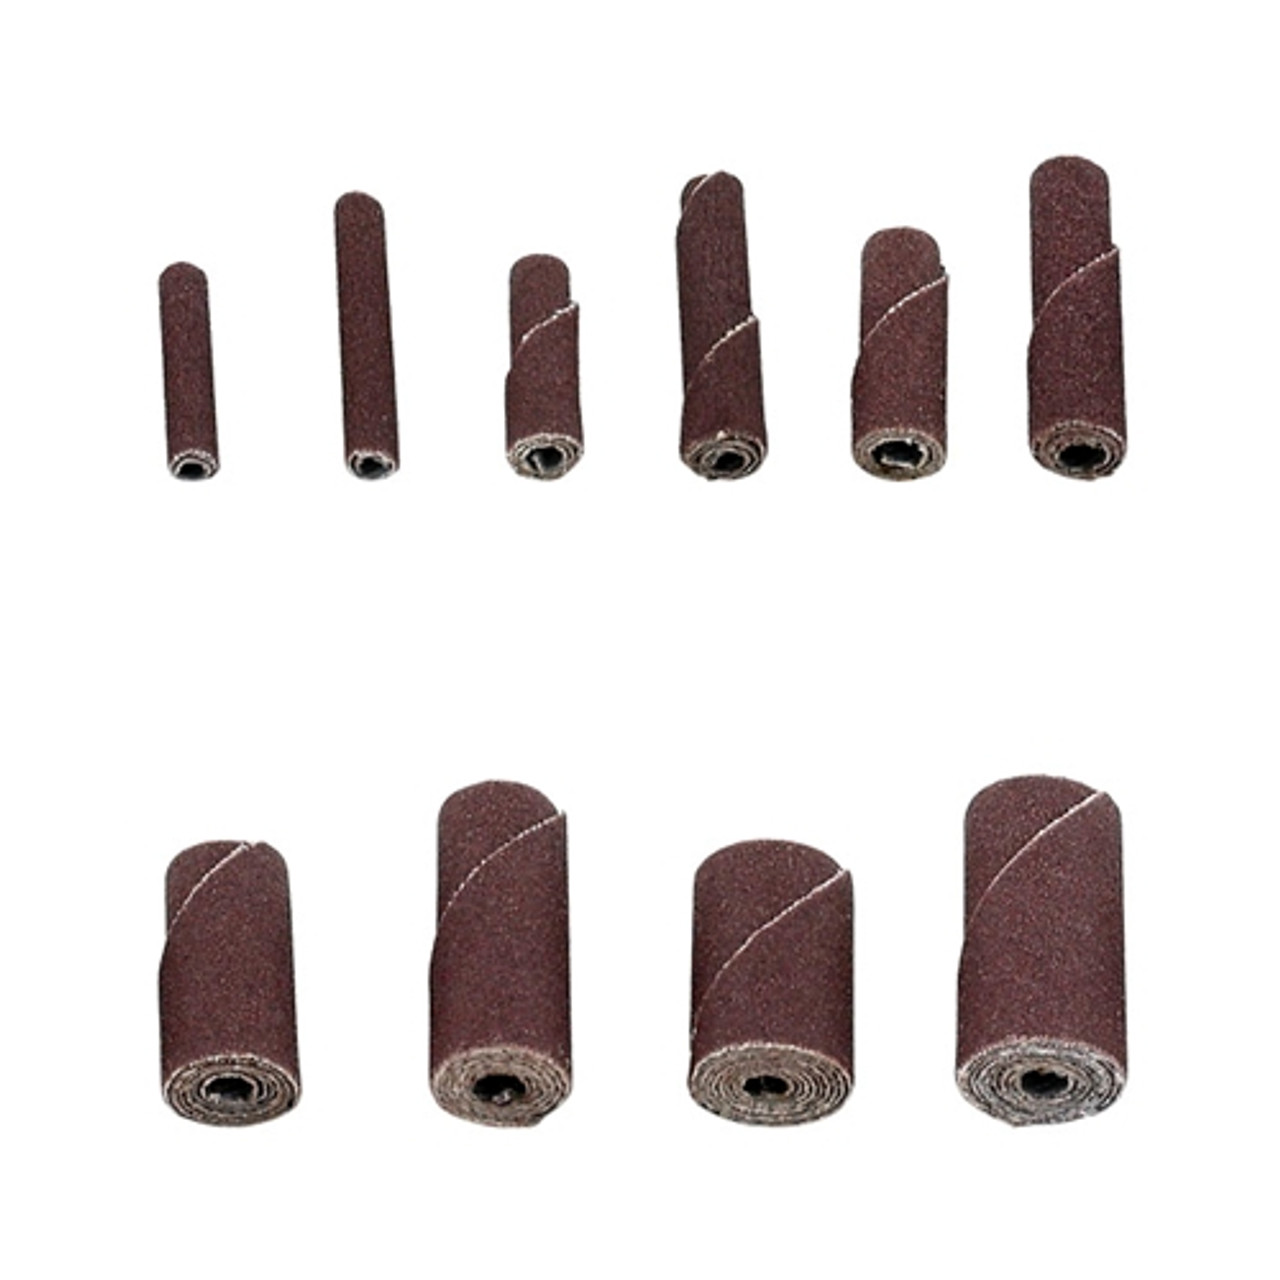 Abrasive Cartridge Rolls - 1/4" x 1" x 1/8", 80 Grit